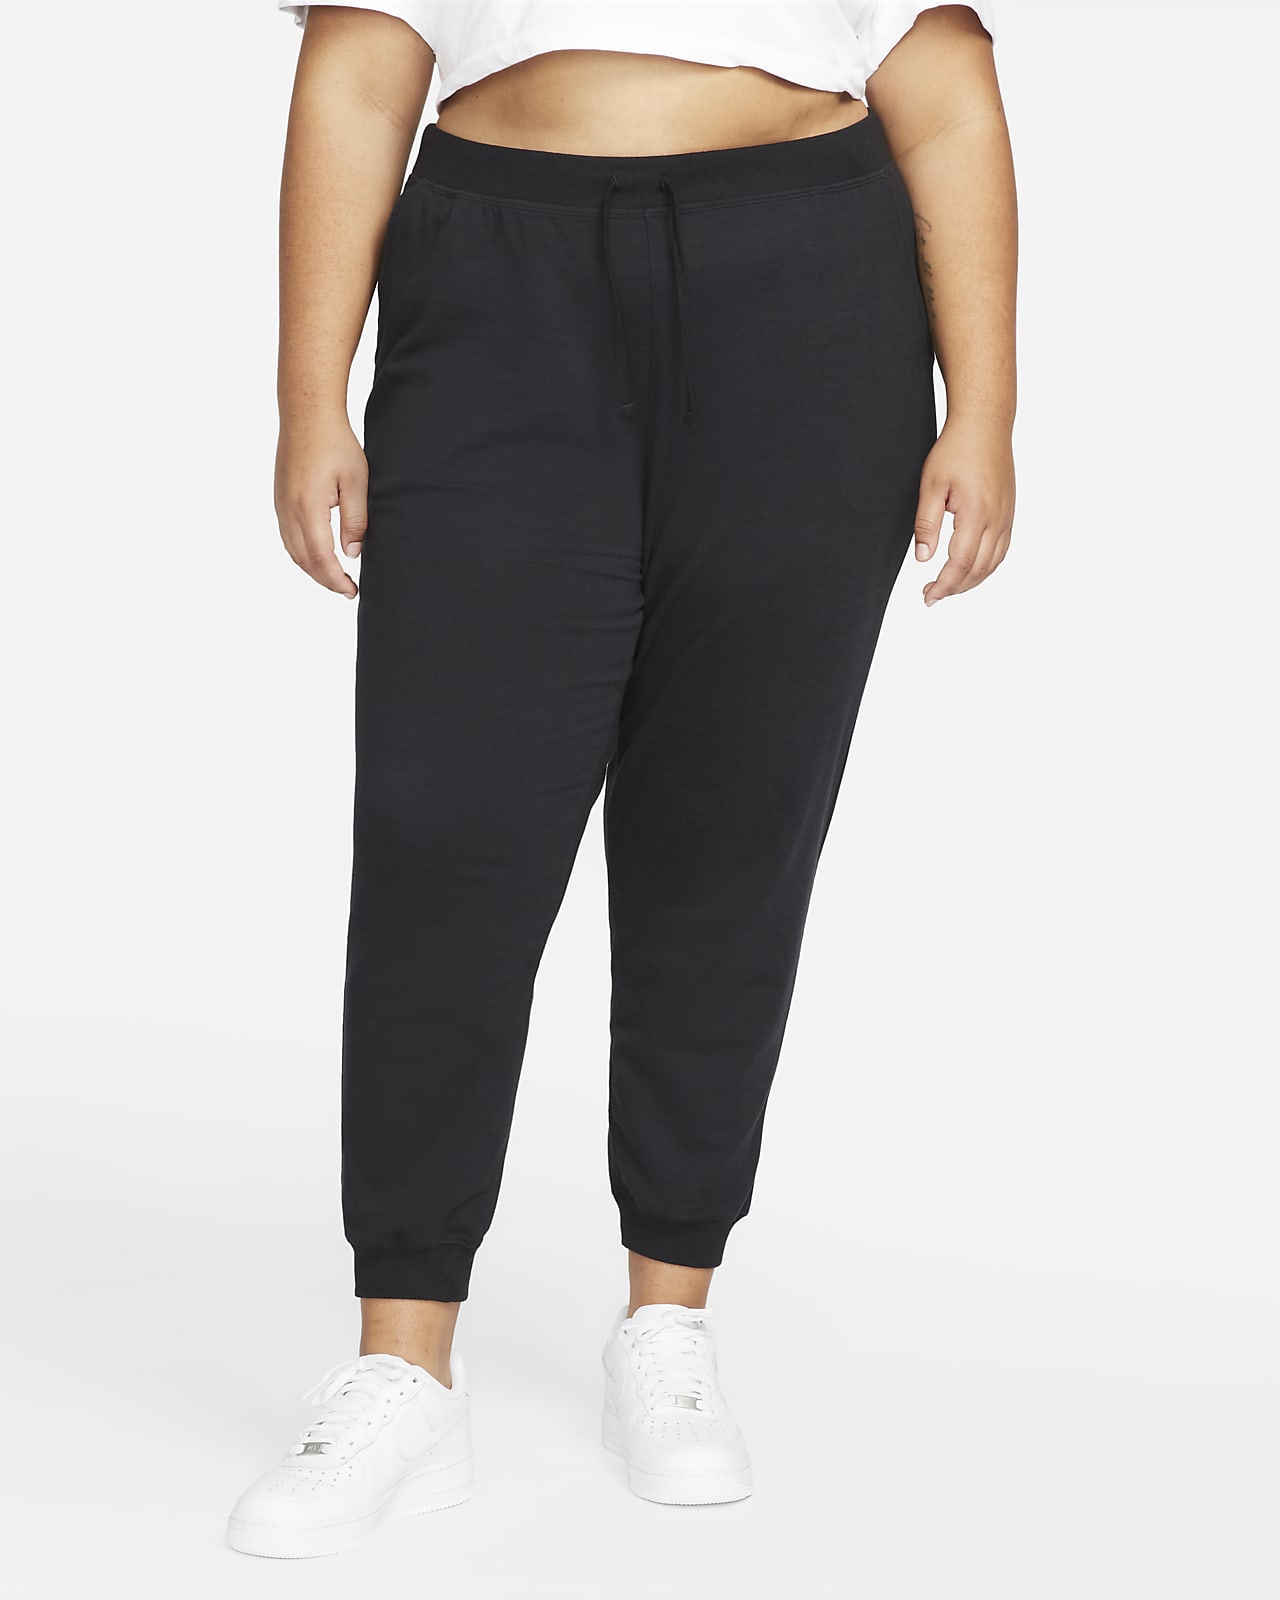 Pantalones de entrenamiento tejido Fleece 7/8 mujer Nike Yoga (talla grande) Nike Yoga Luxe. Nike.com